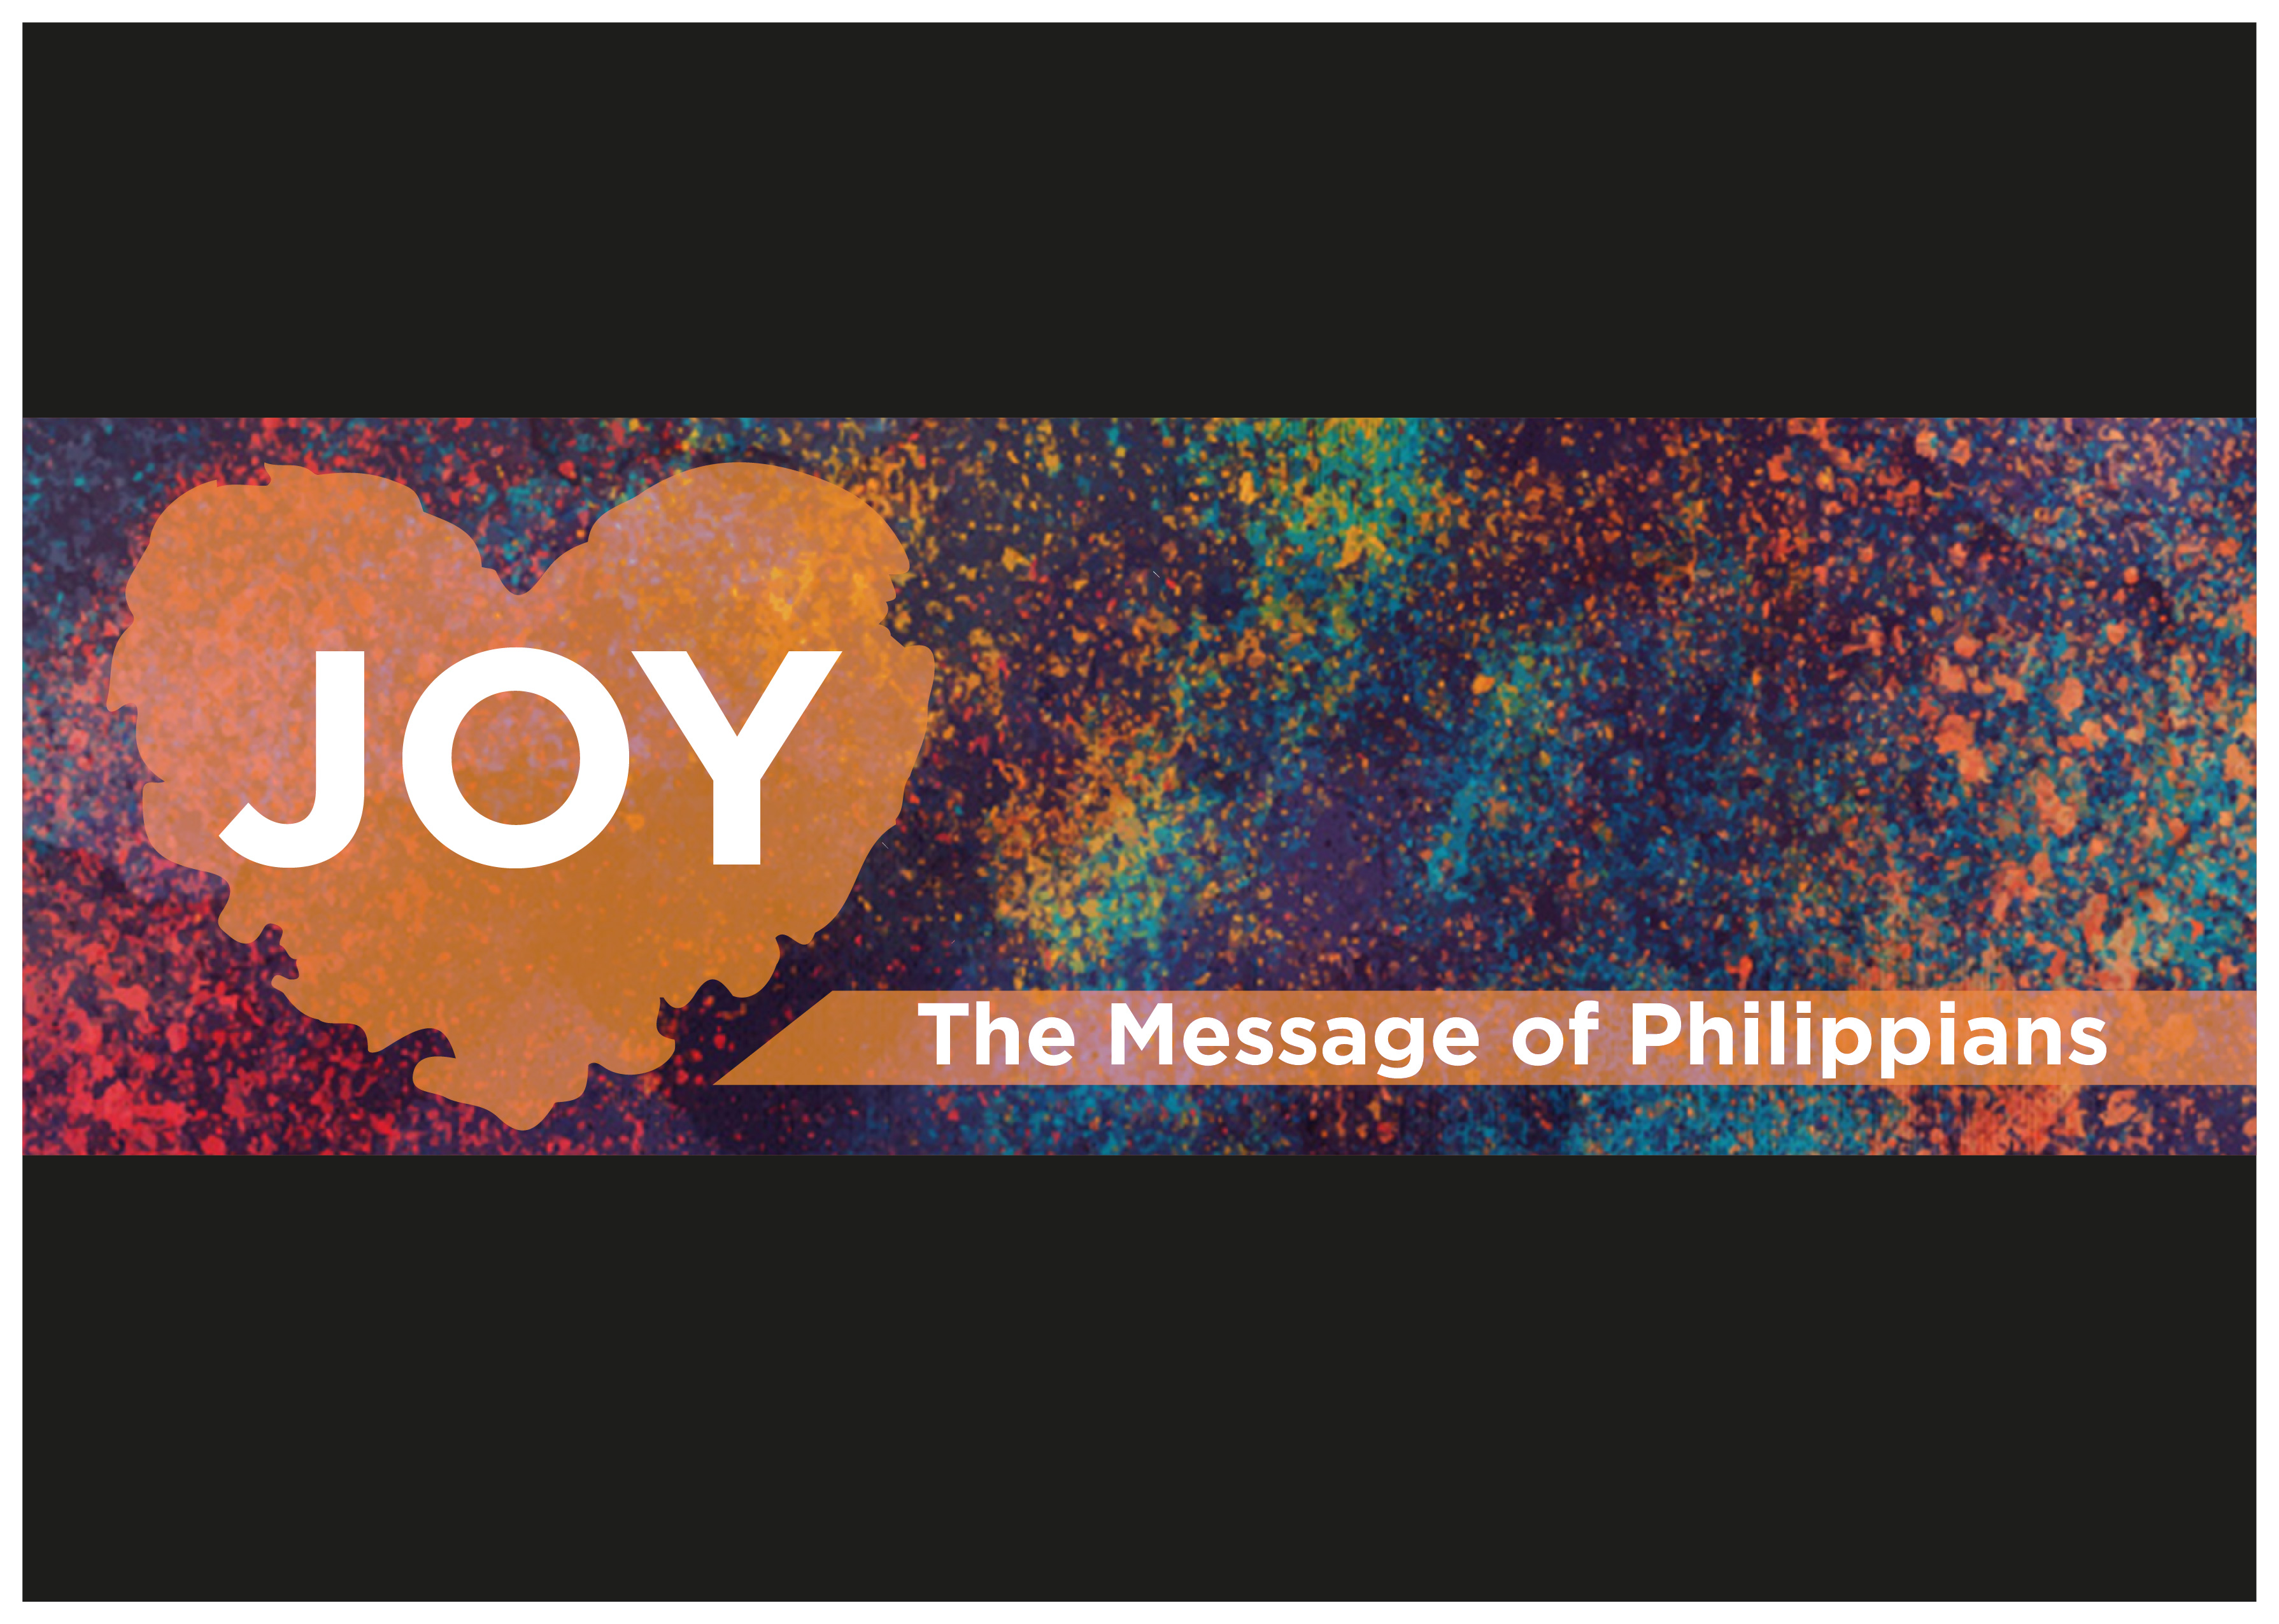 Joy: The Message of Philippians